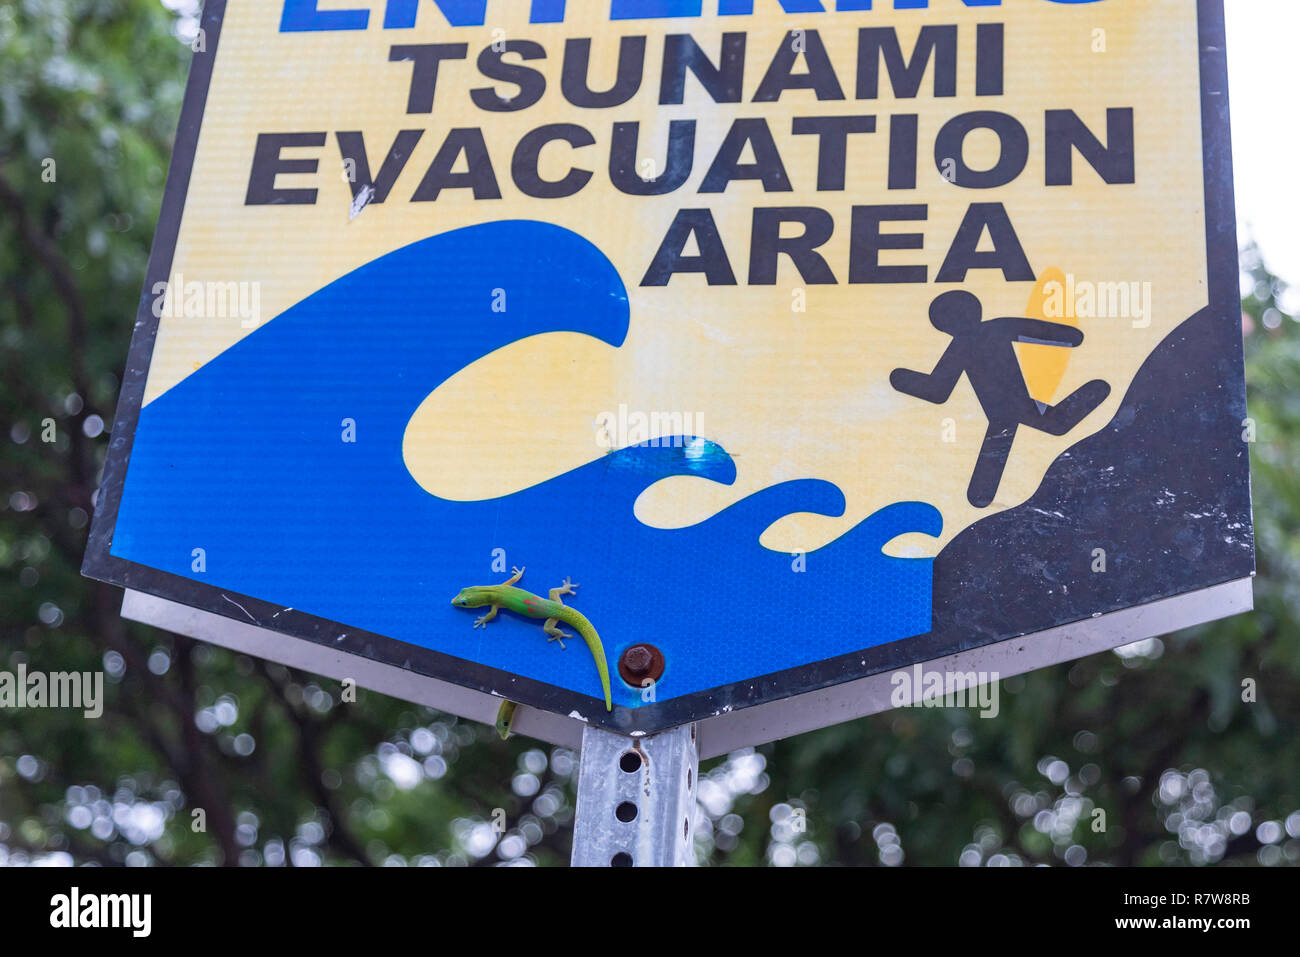 Kailua-Kona, Hawaii - Gold dust day geckos (Phelsuma laticauda) on a tsunami evacuation area sign near the Pacific Ocean. Stock Photo